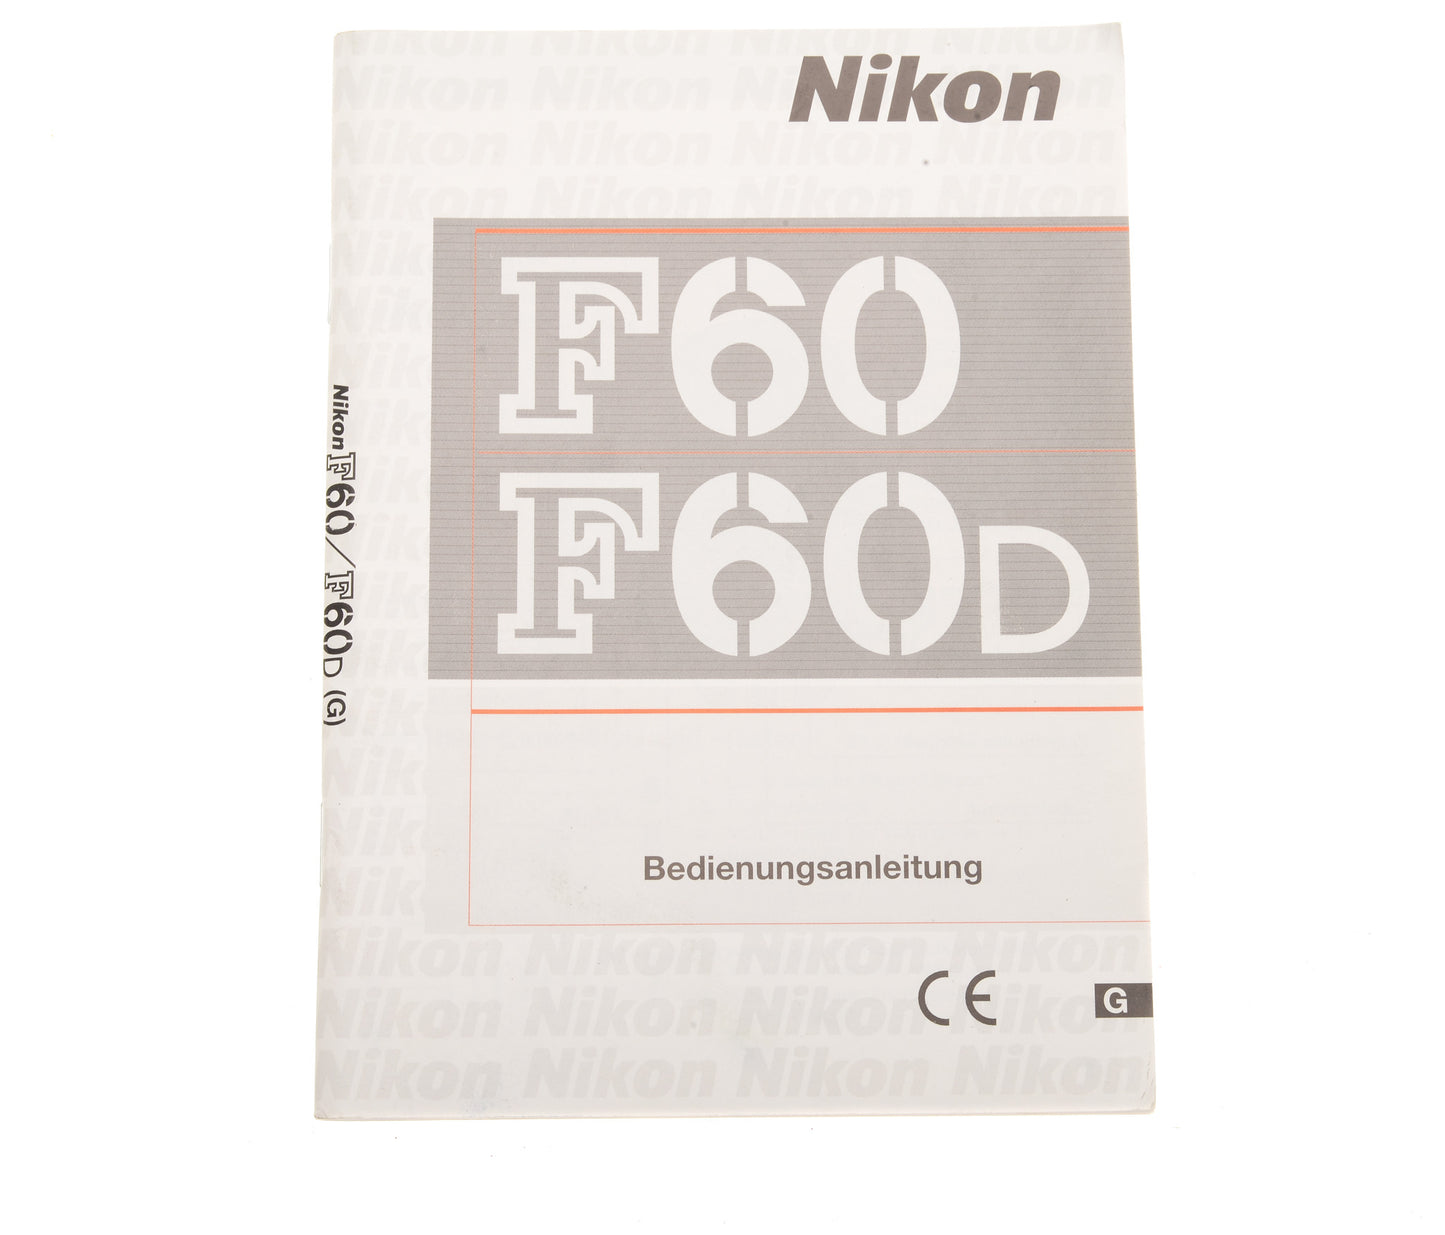 Nikon F60 / F60D Instructions